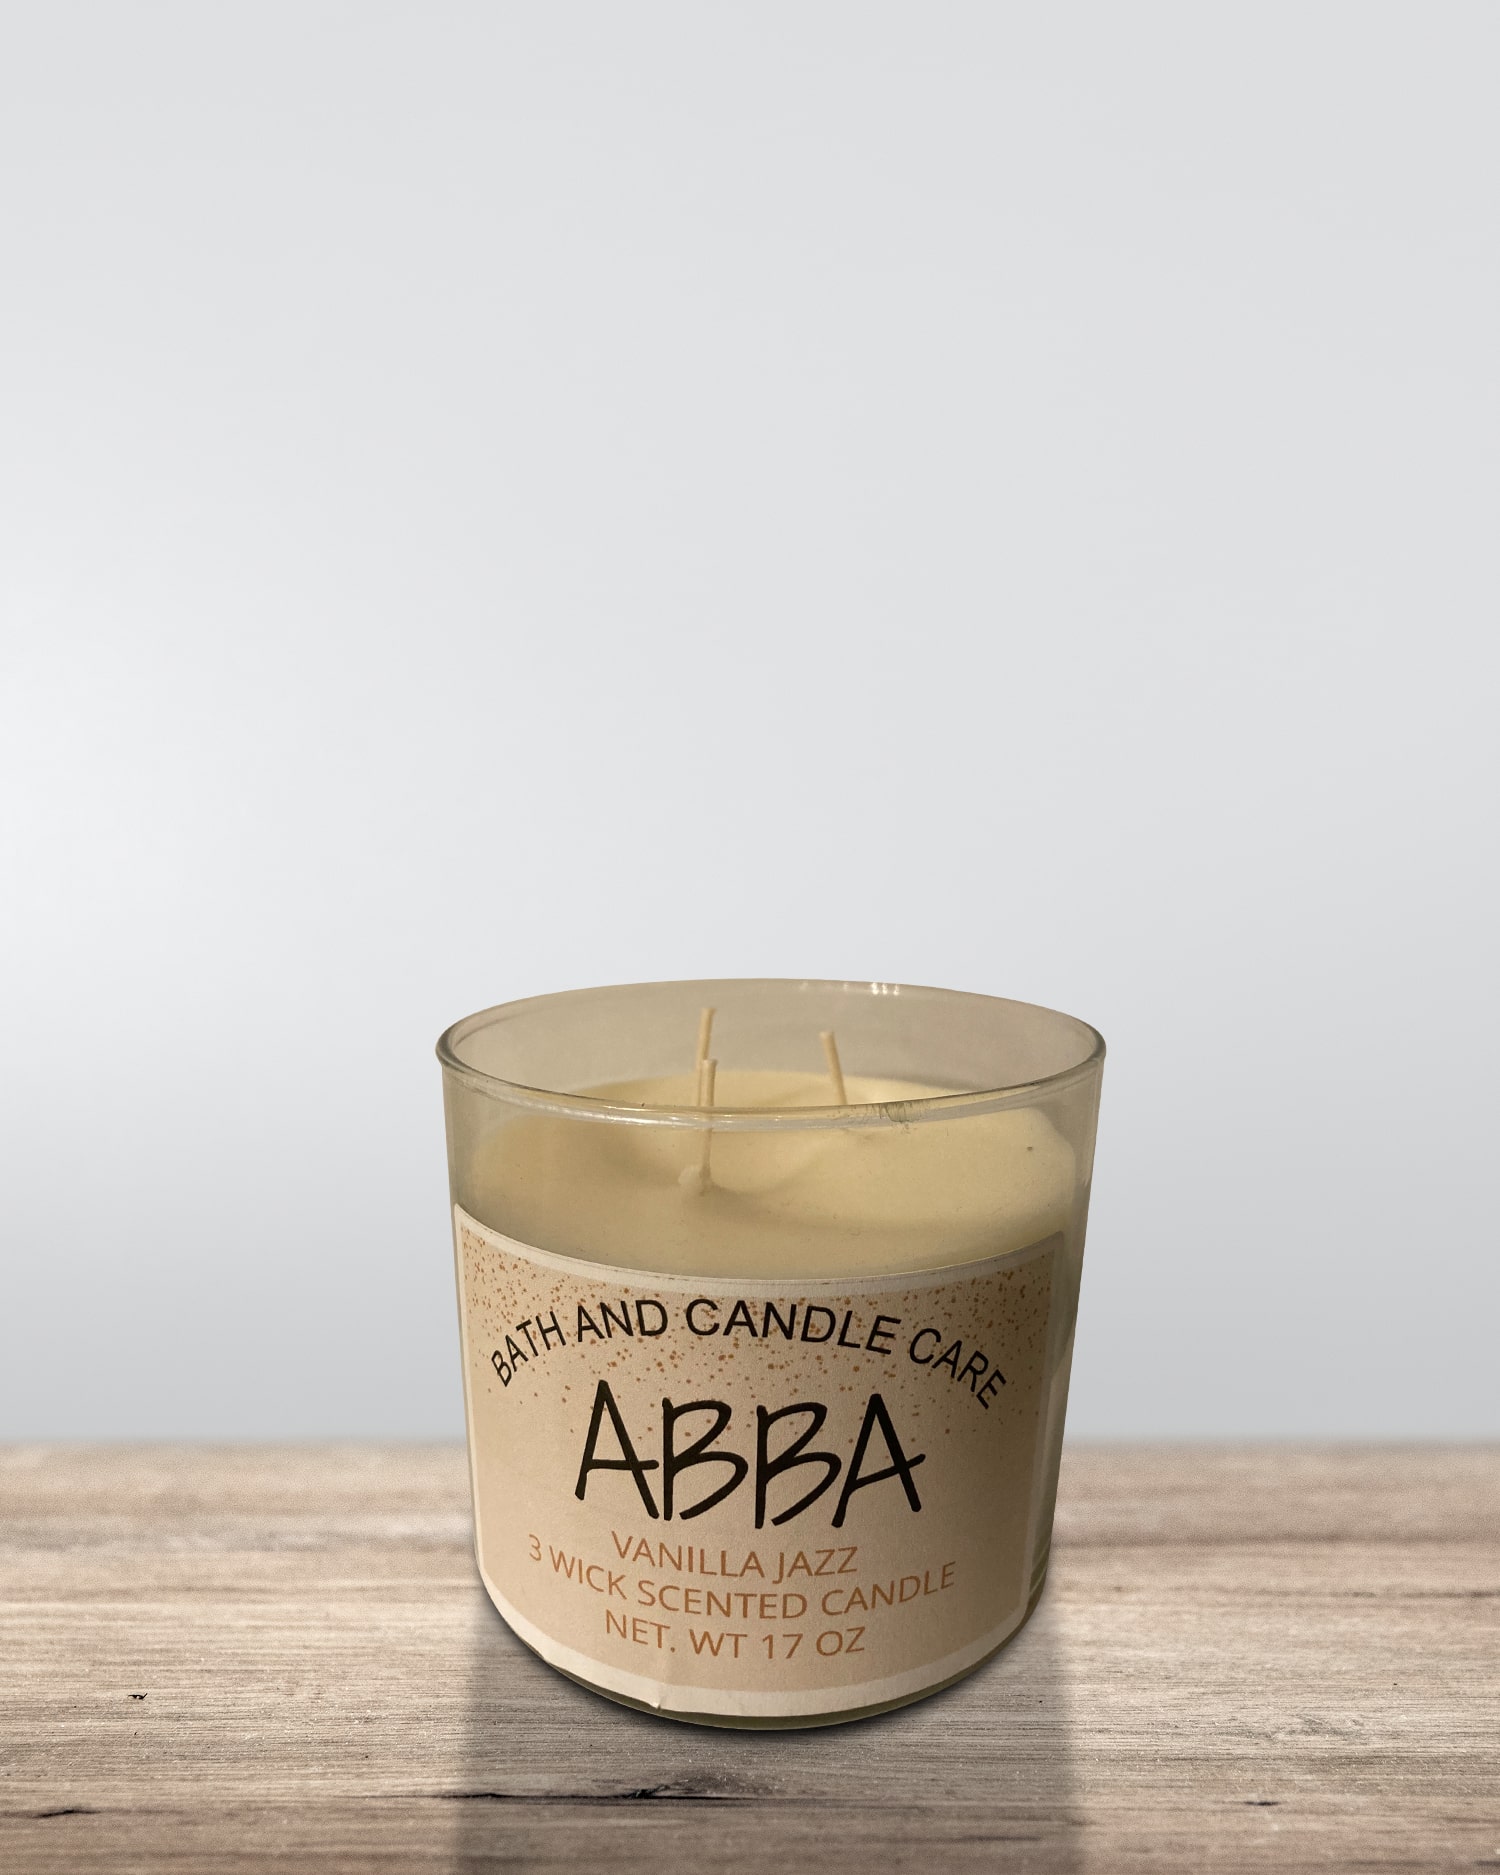 ABBA Bath & Candle Co candle